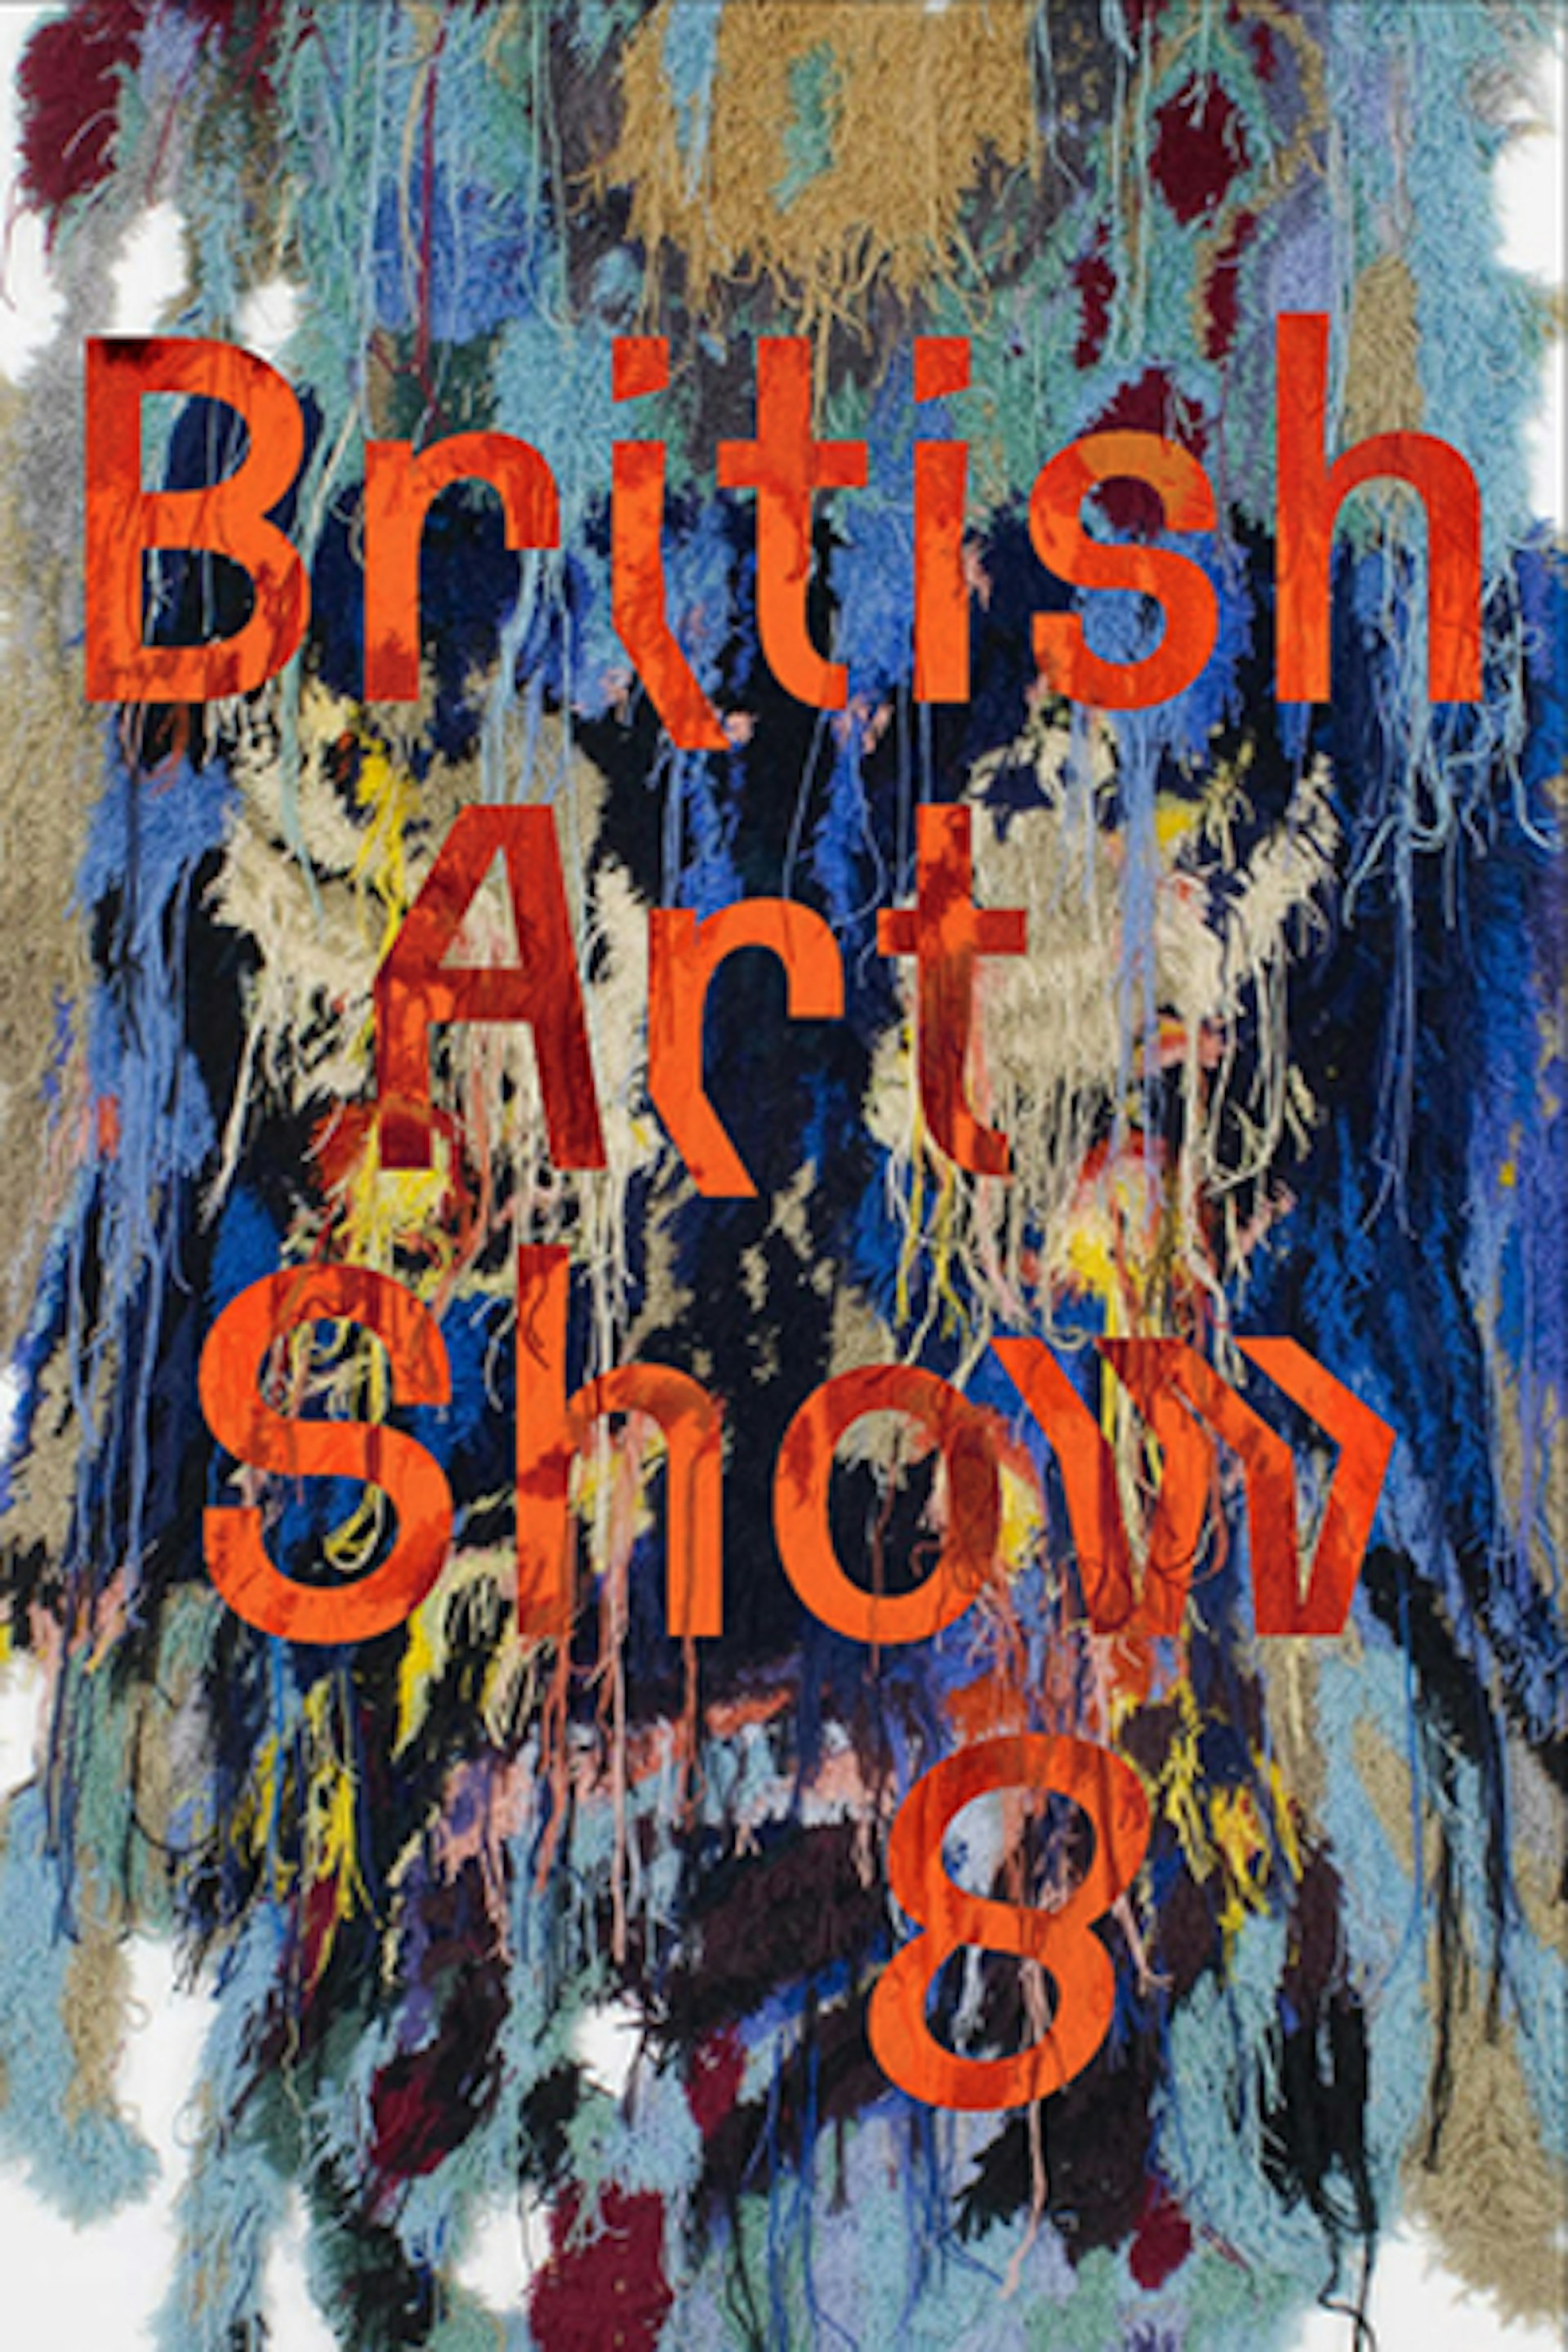 Roger Malbert, "Cover Collaboration", British Art Studies, Issue 1